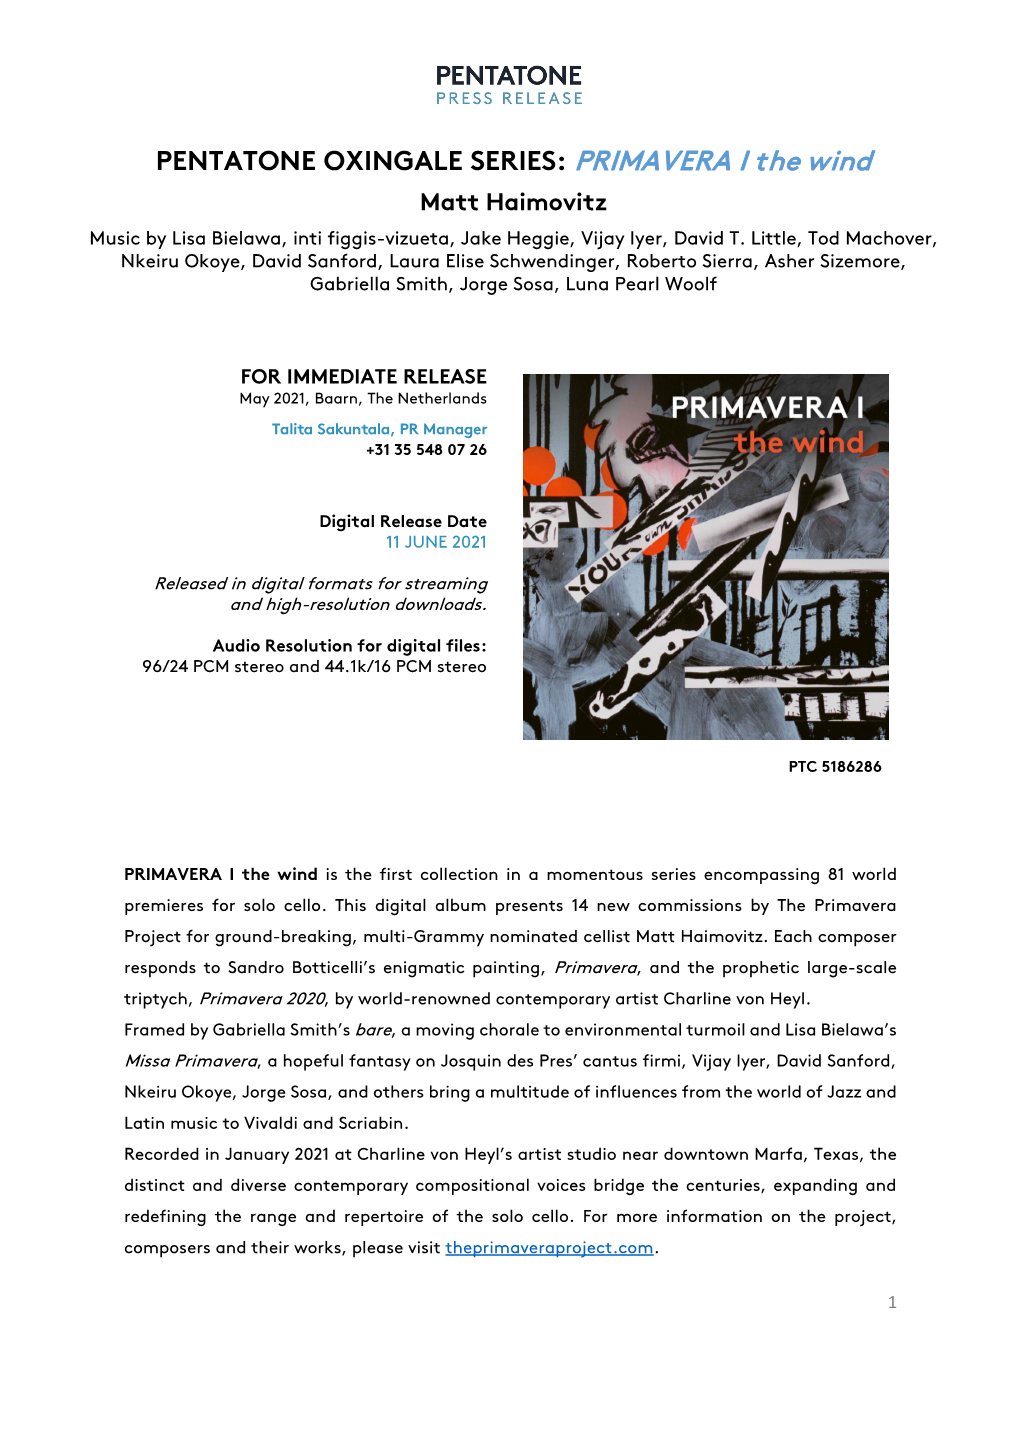 PENTATONE OXINGALE SERIES: PRIMAVERA I the Wind Matt Haimovitz Music by Lisa Bielawa, Inti Figgis-Vizueta, Jake Heggie, Vijay Iyer, David T